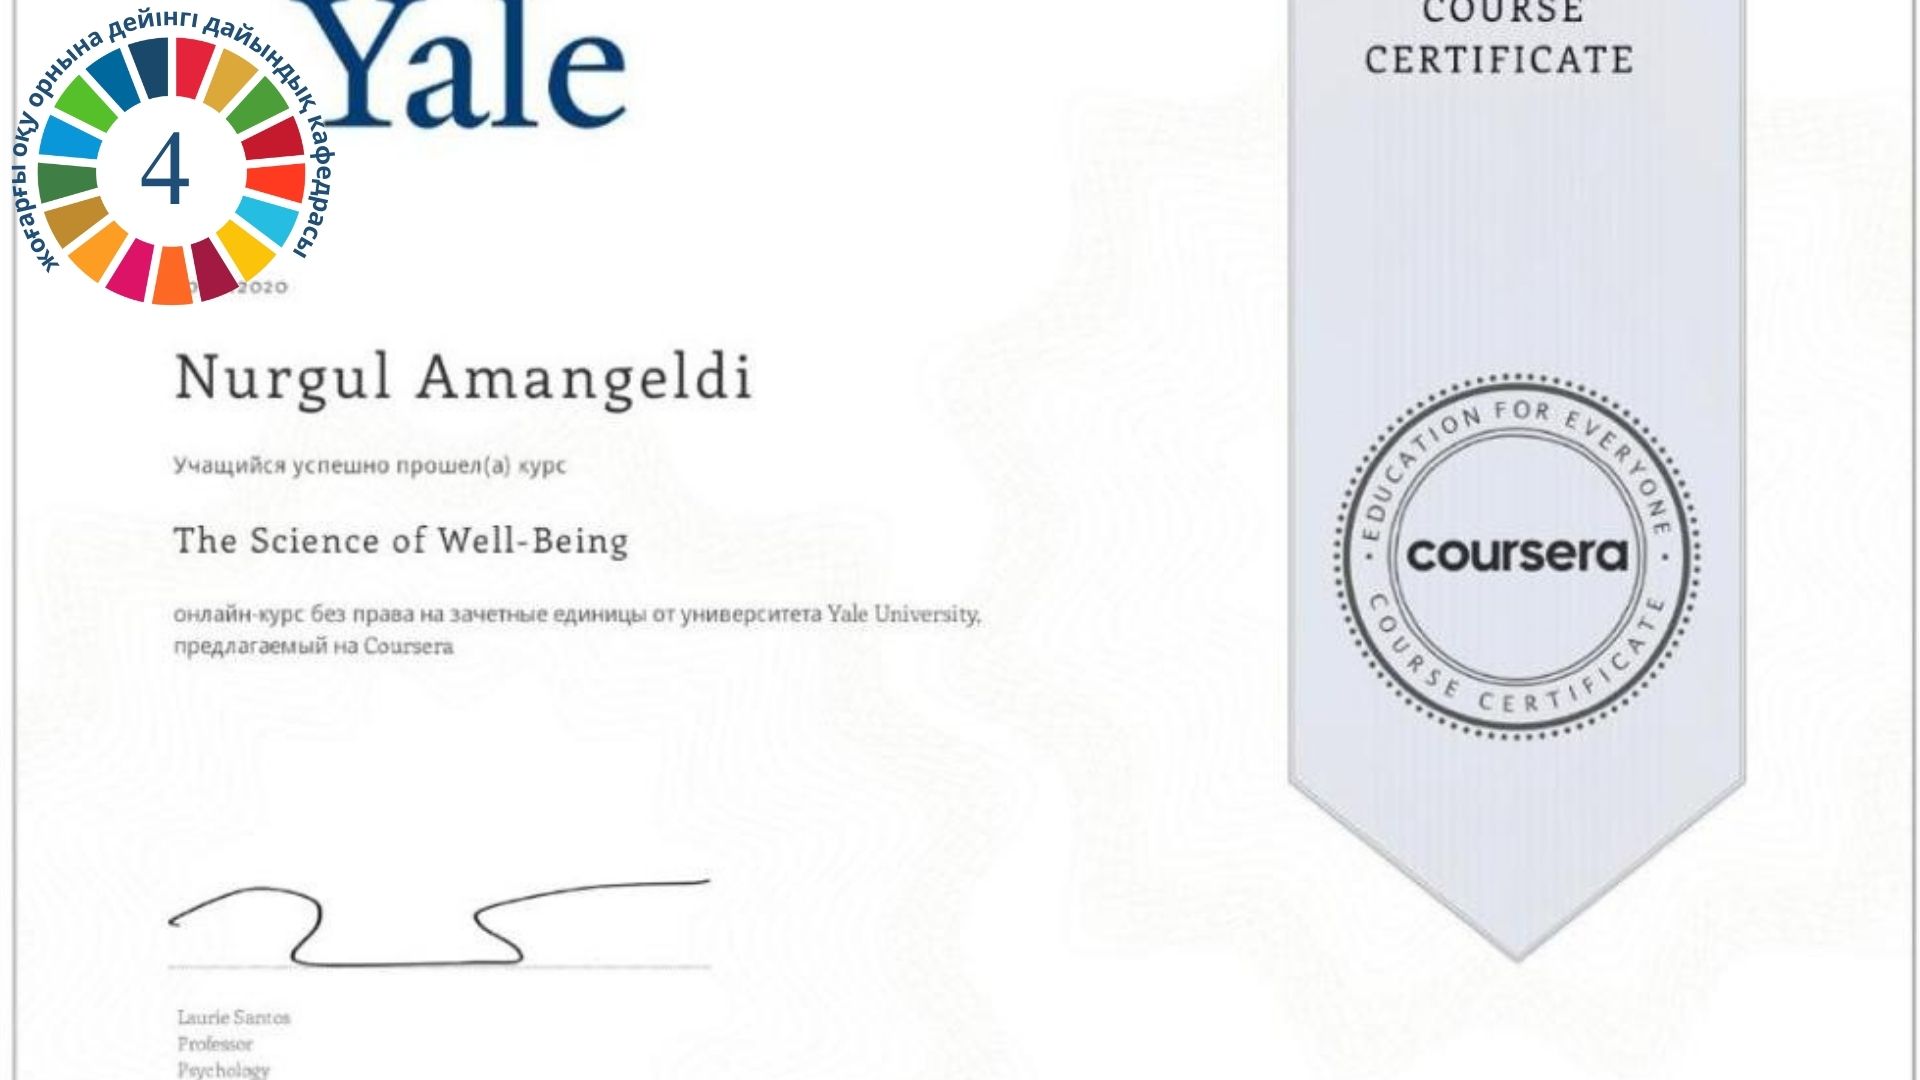 Сертификат от Coursera